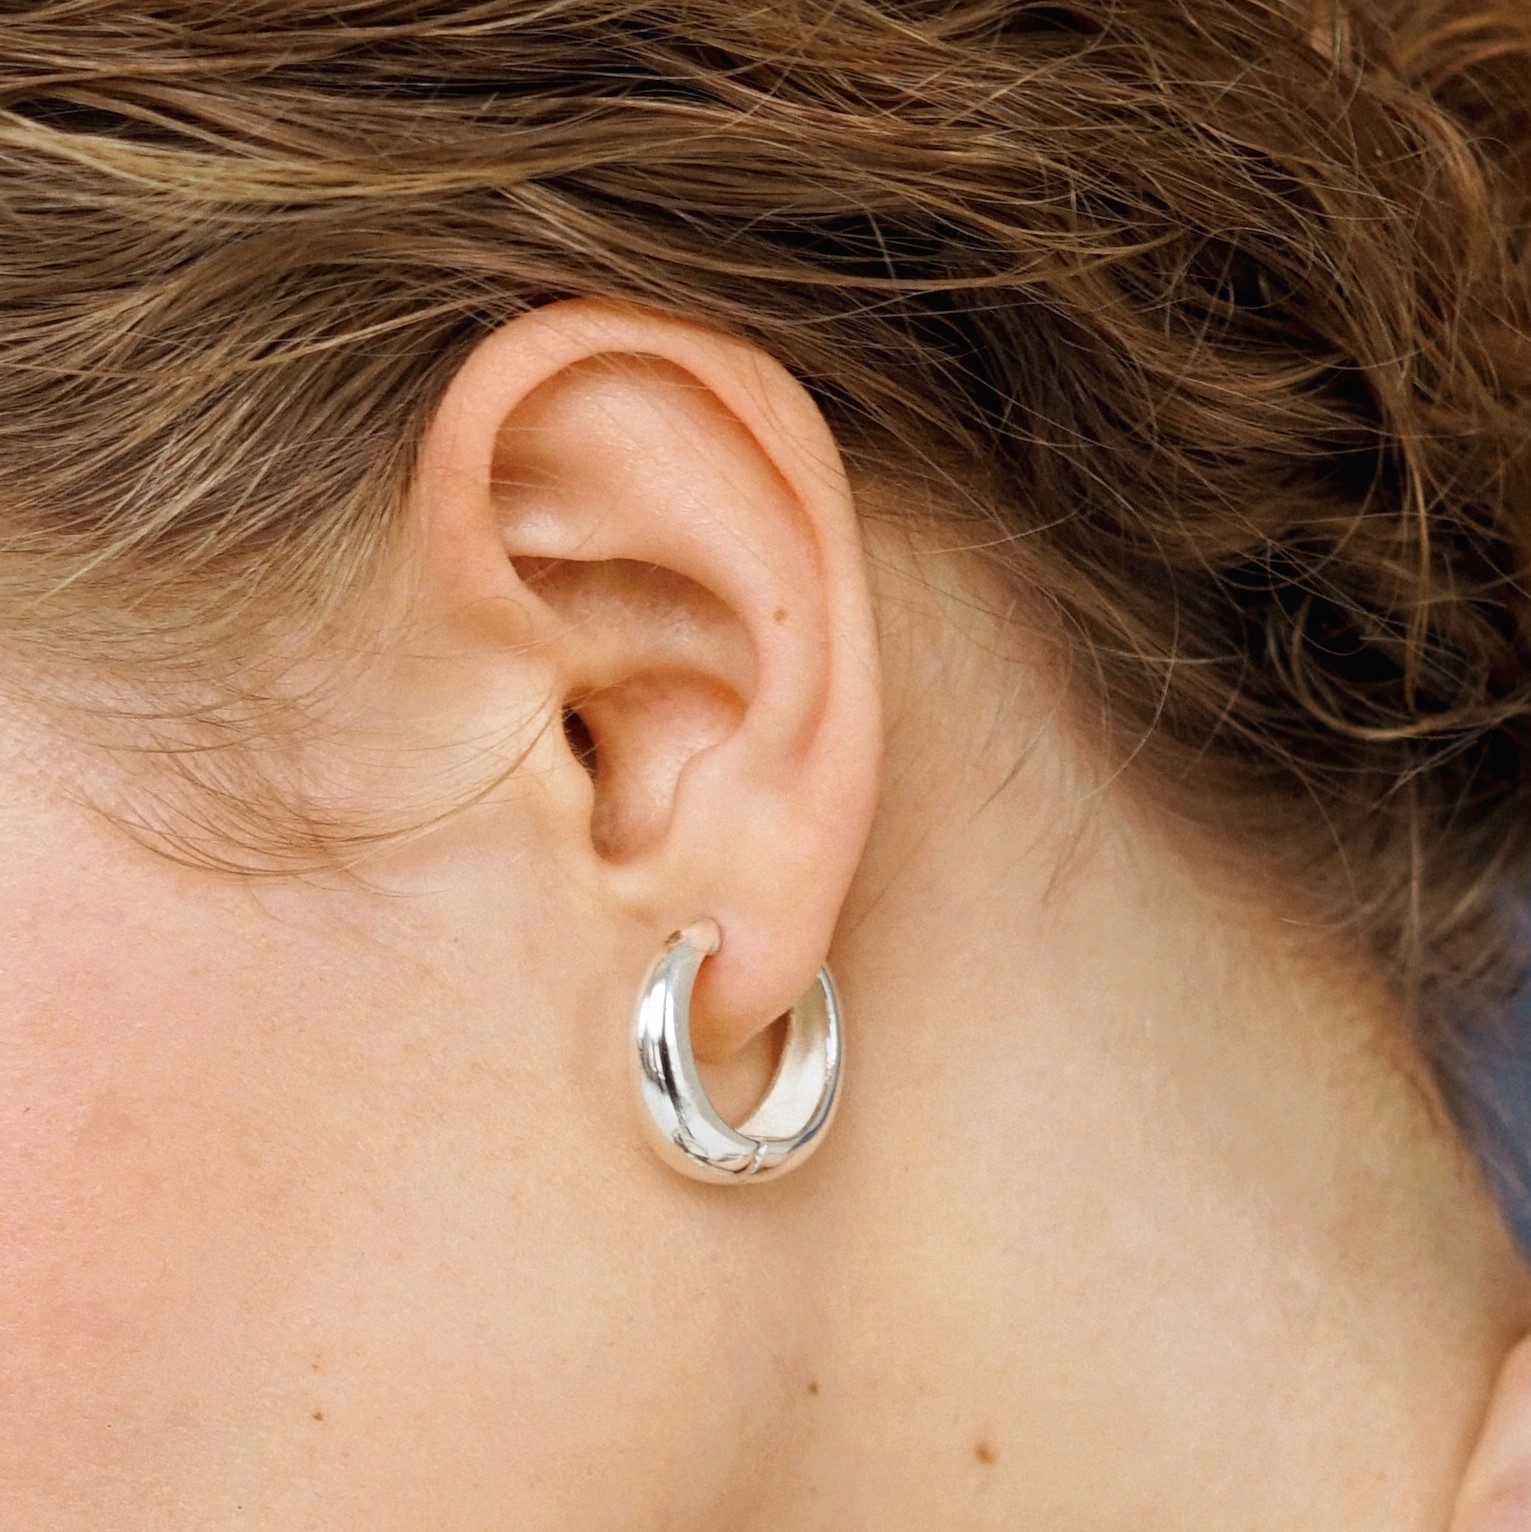 Shining earrings